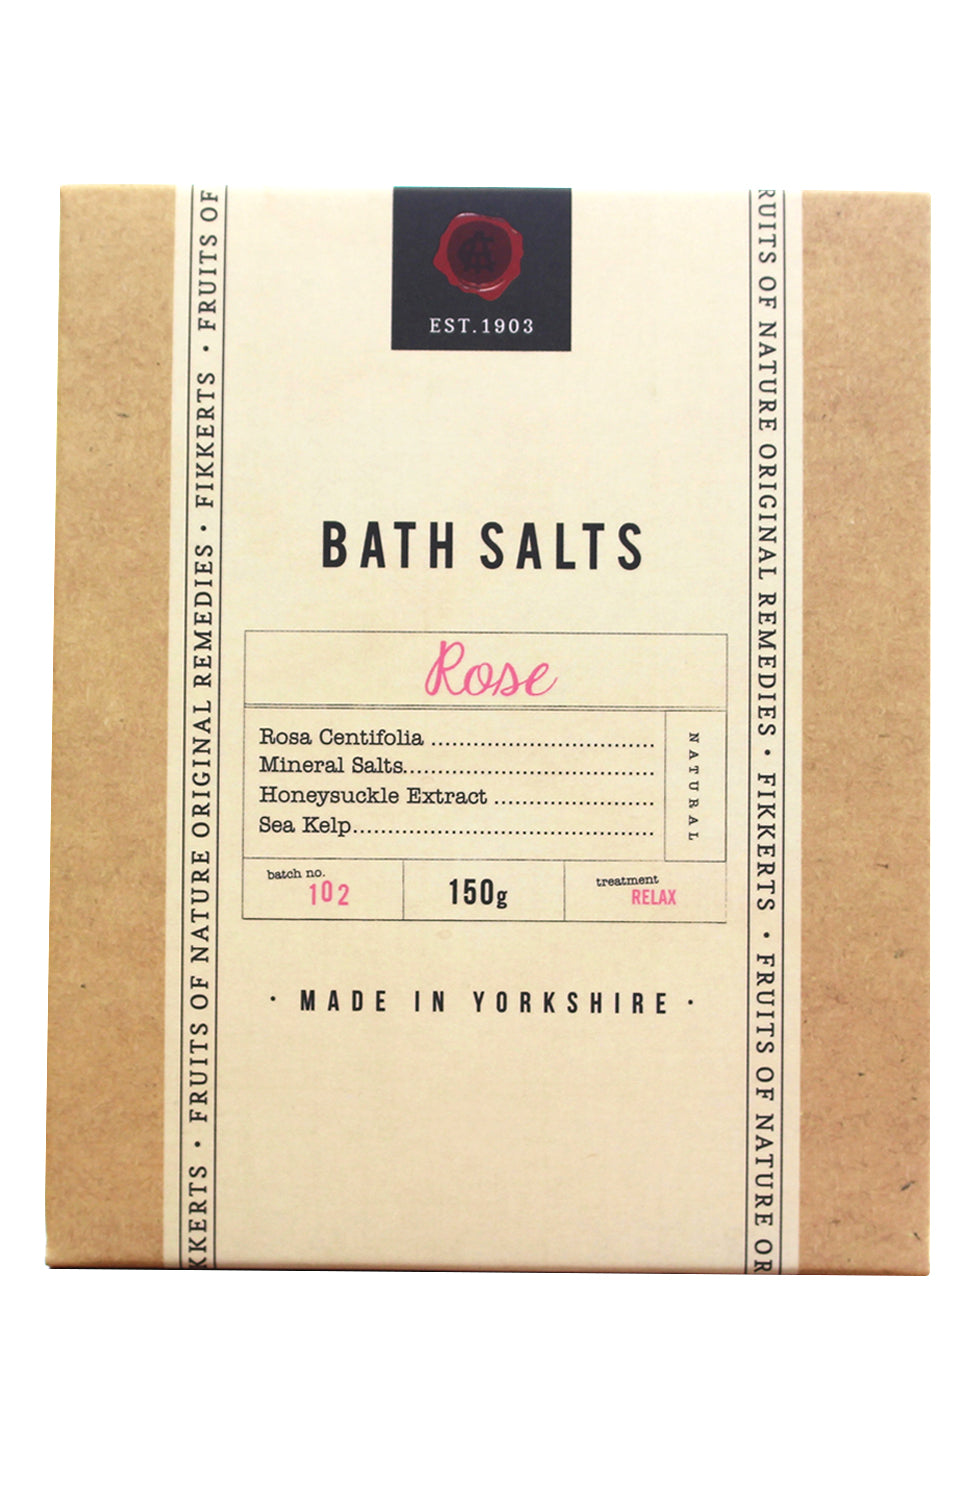 Rose bath salts